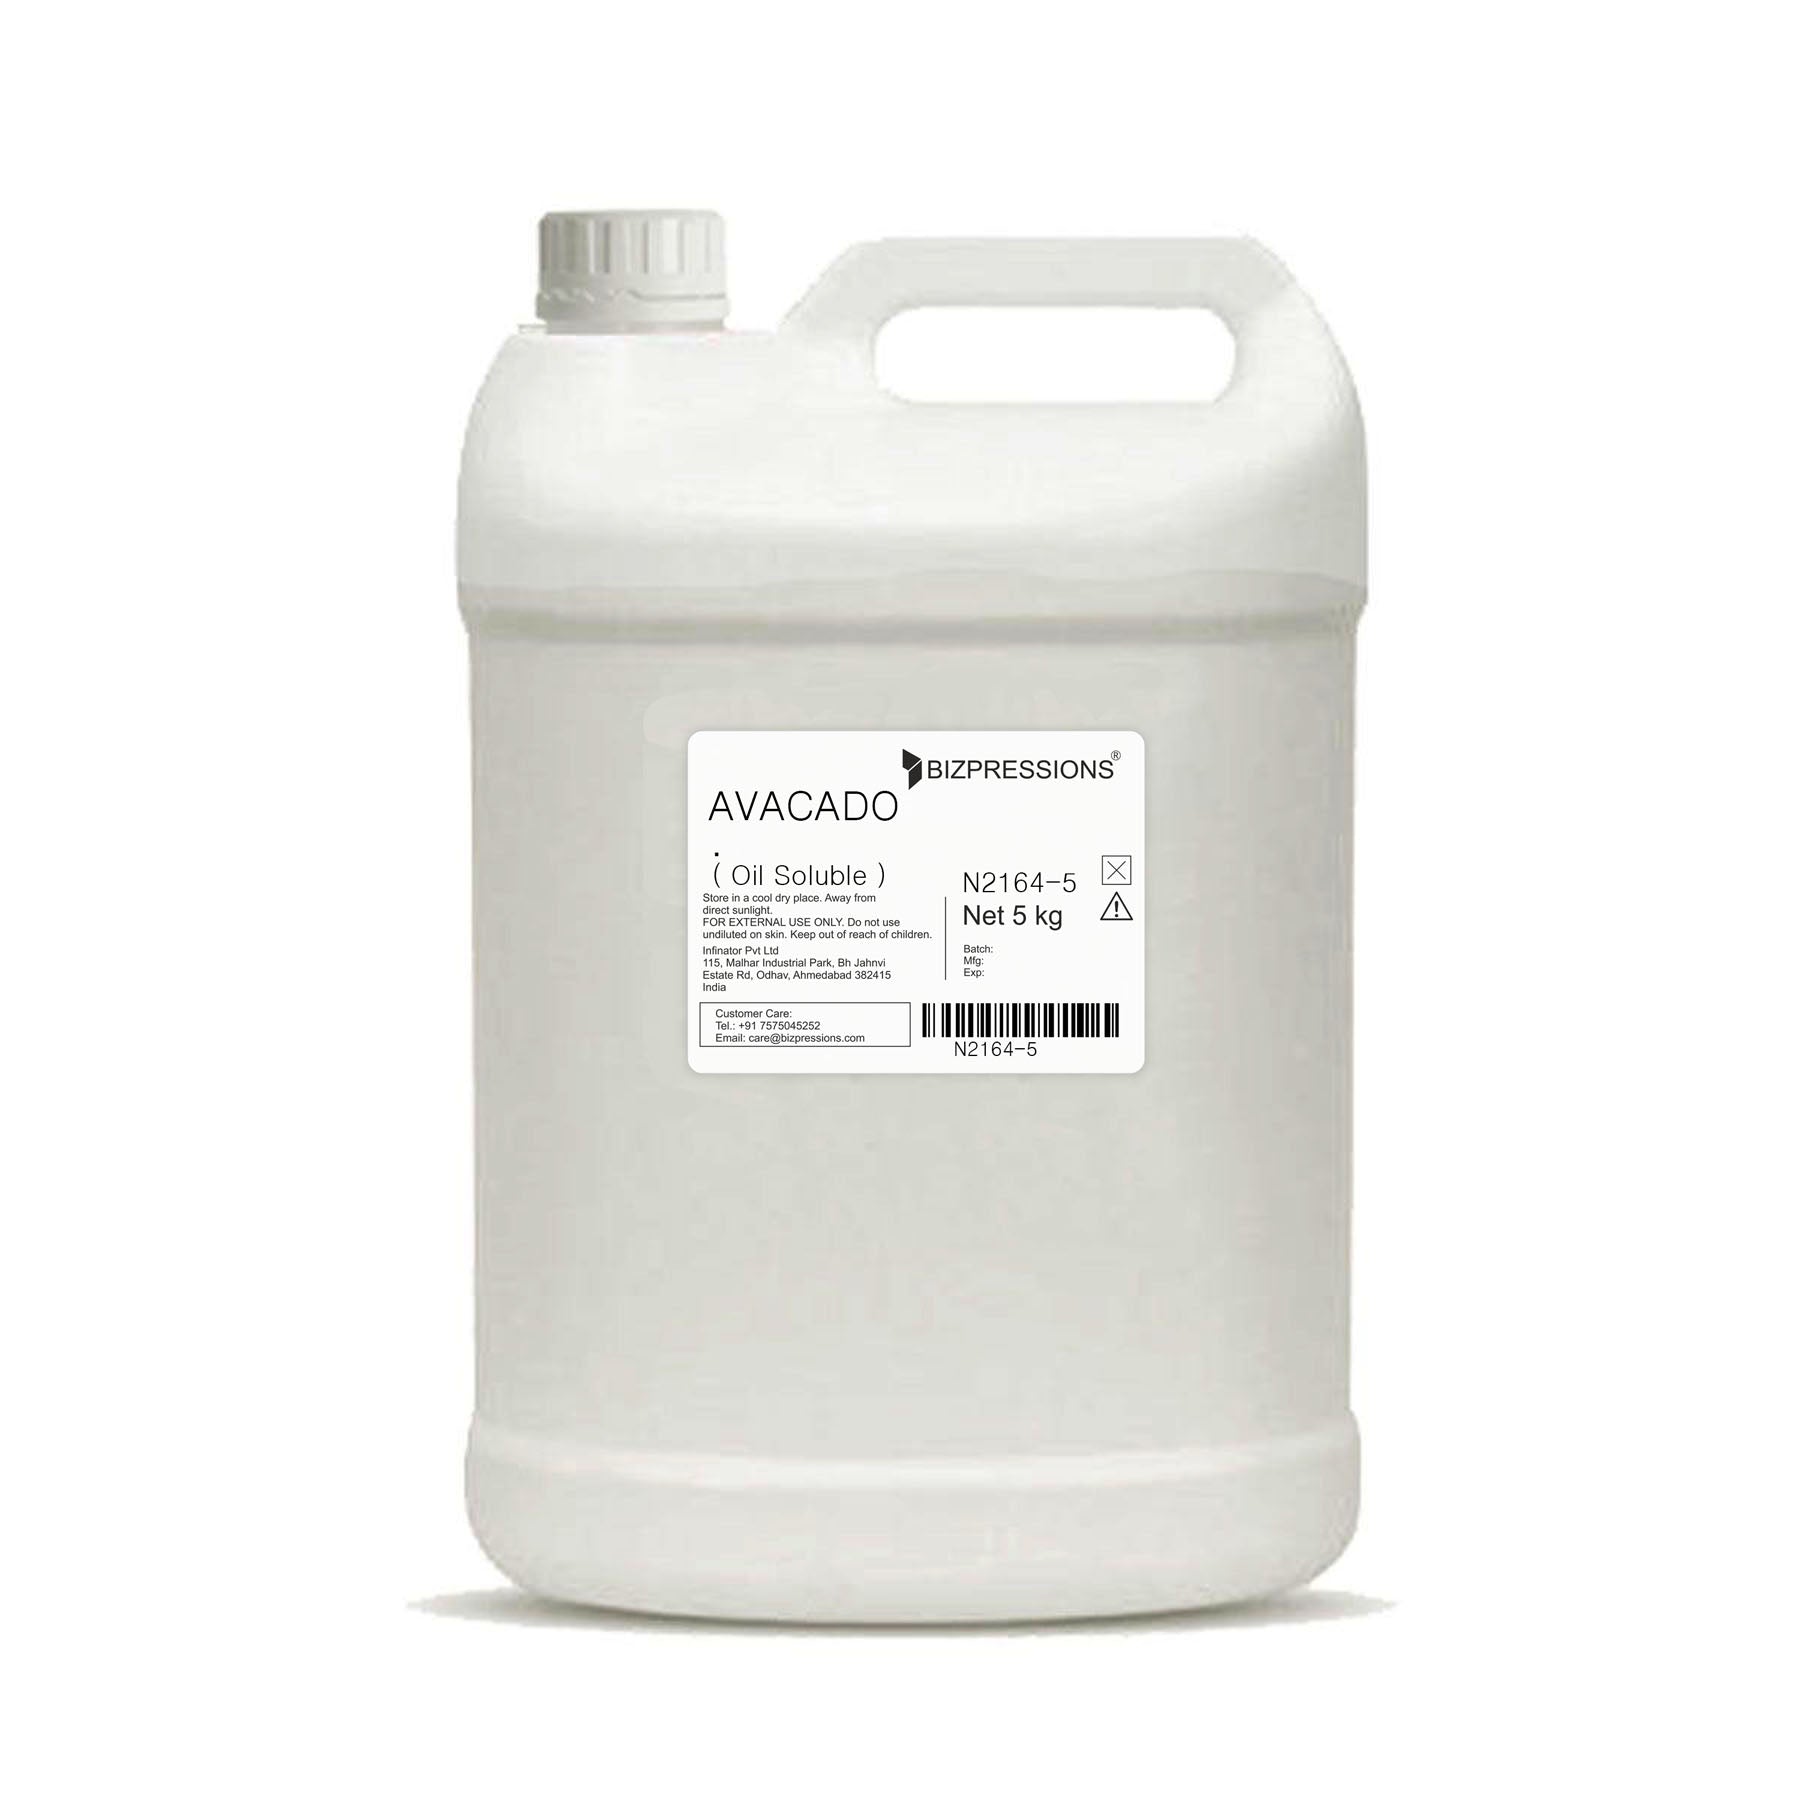 AVACADO - Fragrance ( Oil Soluble ) - 5 kg